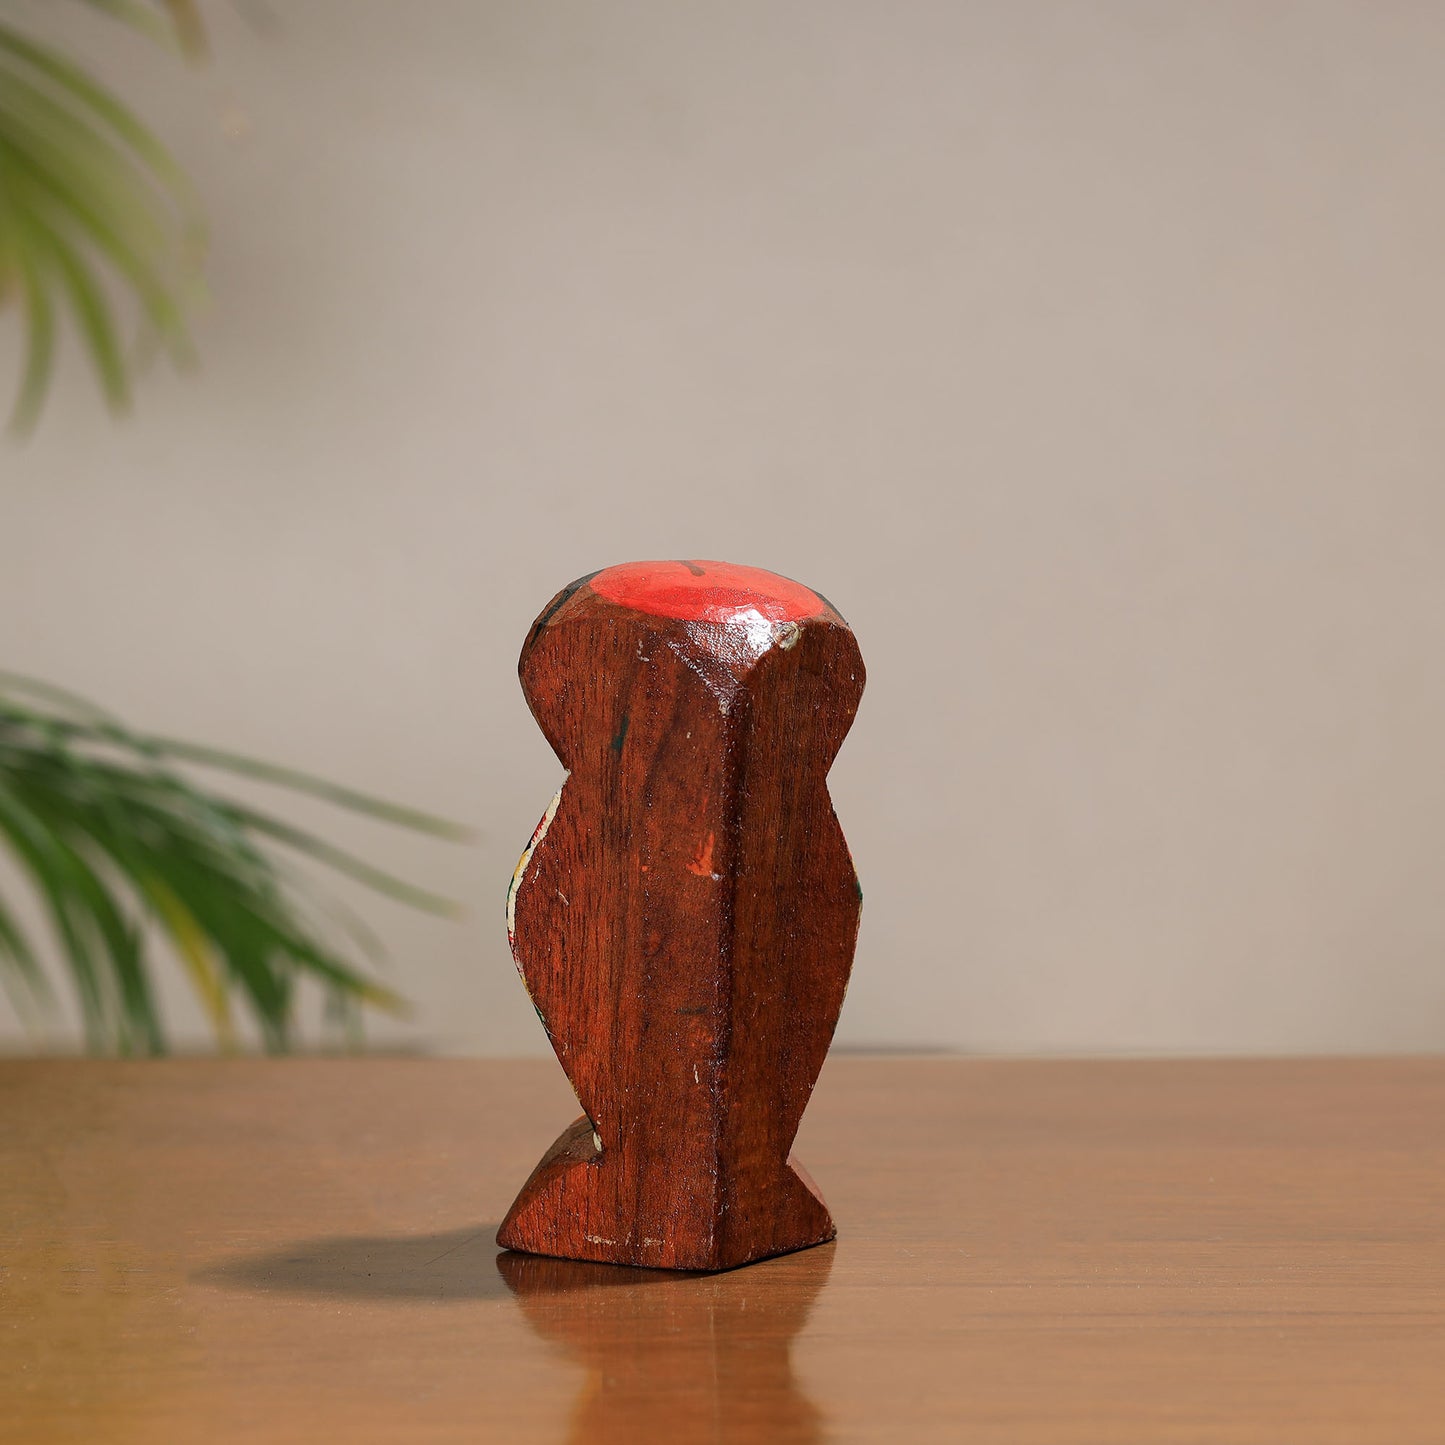 Owl - Traditional Burdwan Wood Craft Handpainted Sculpture (Small) 14